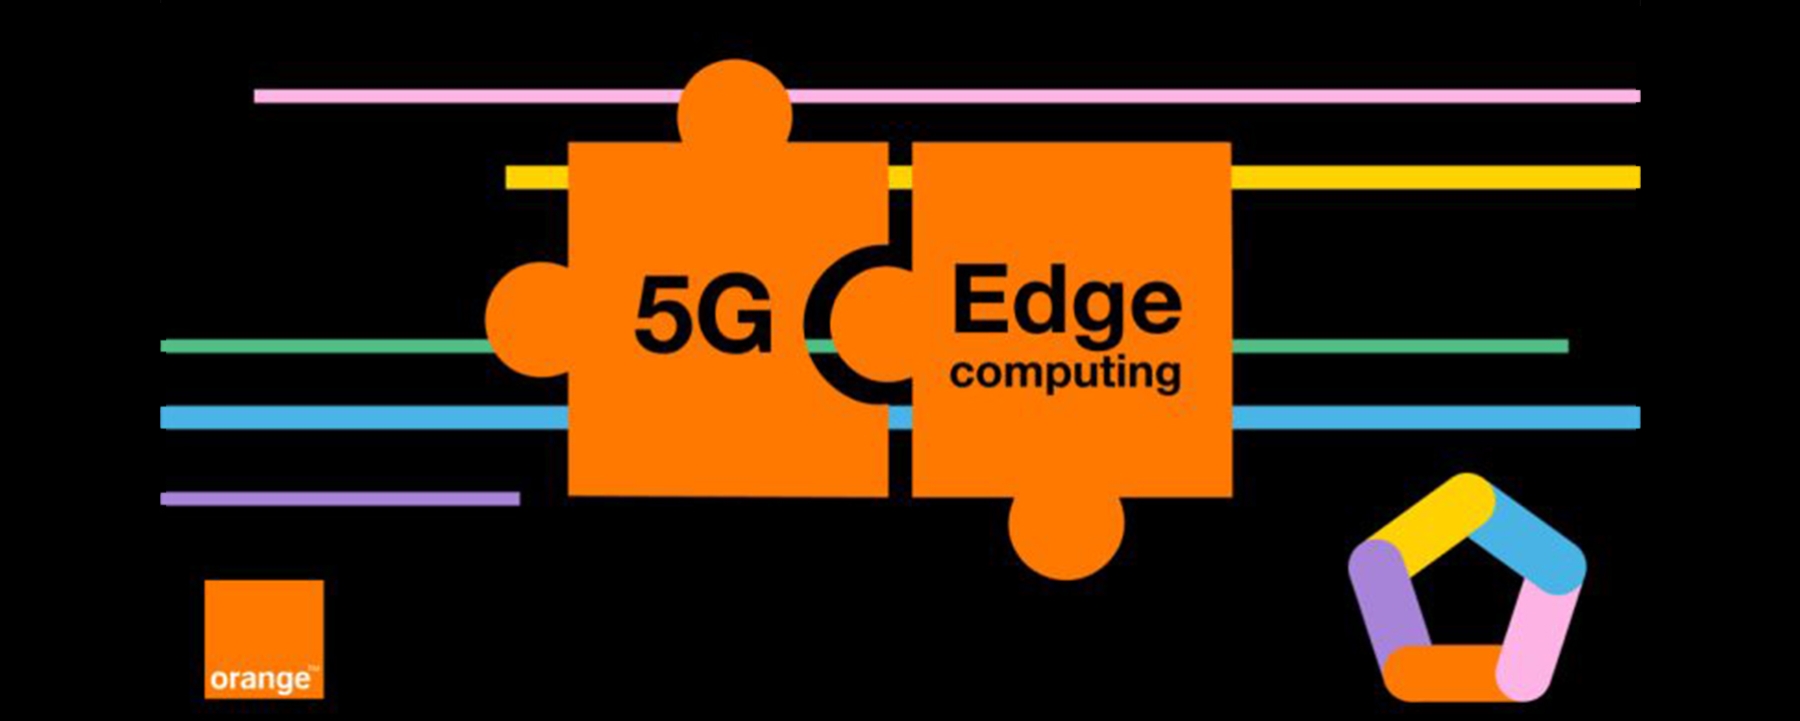 edge computing by orange